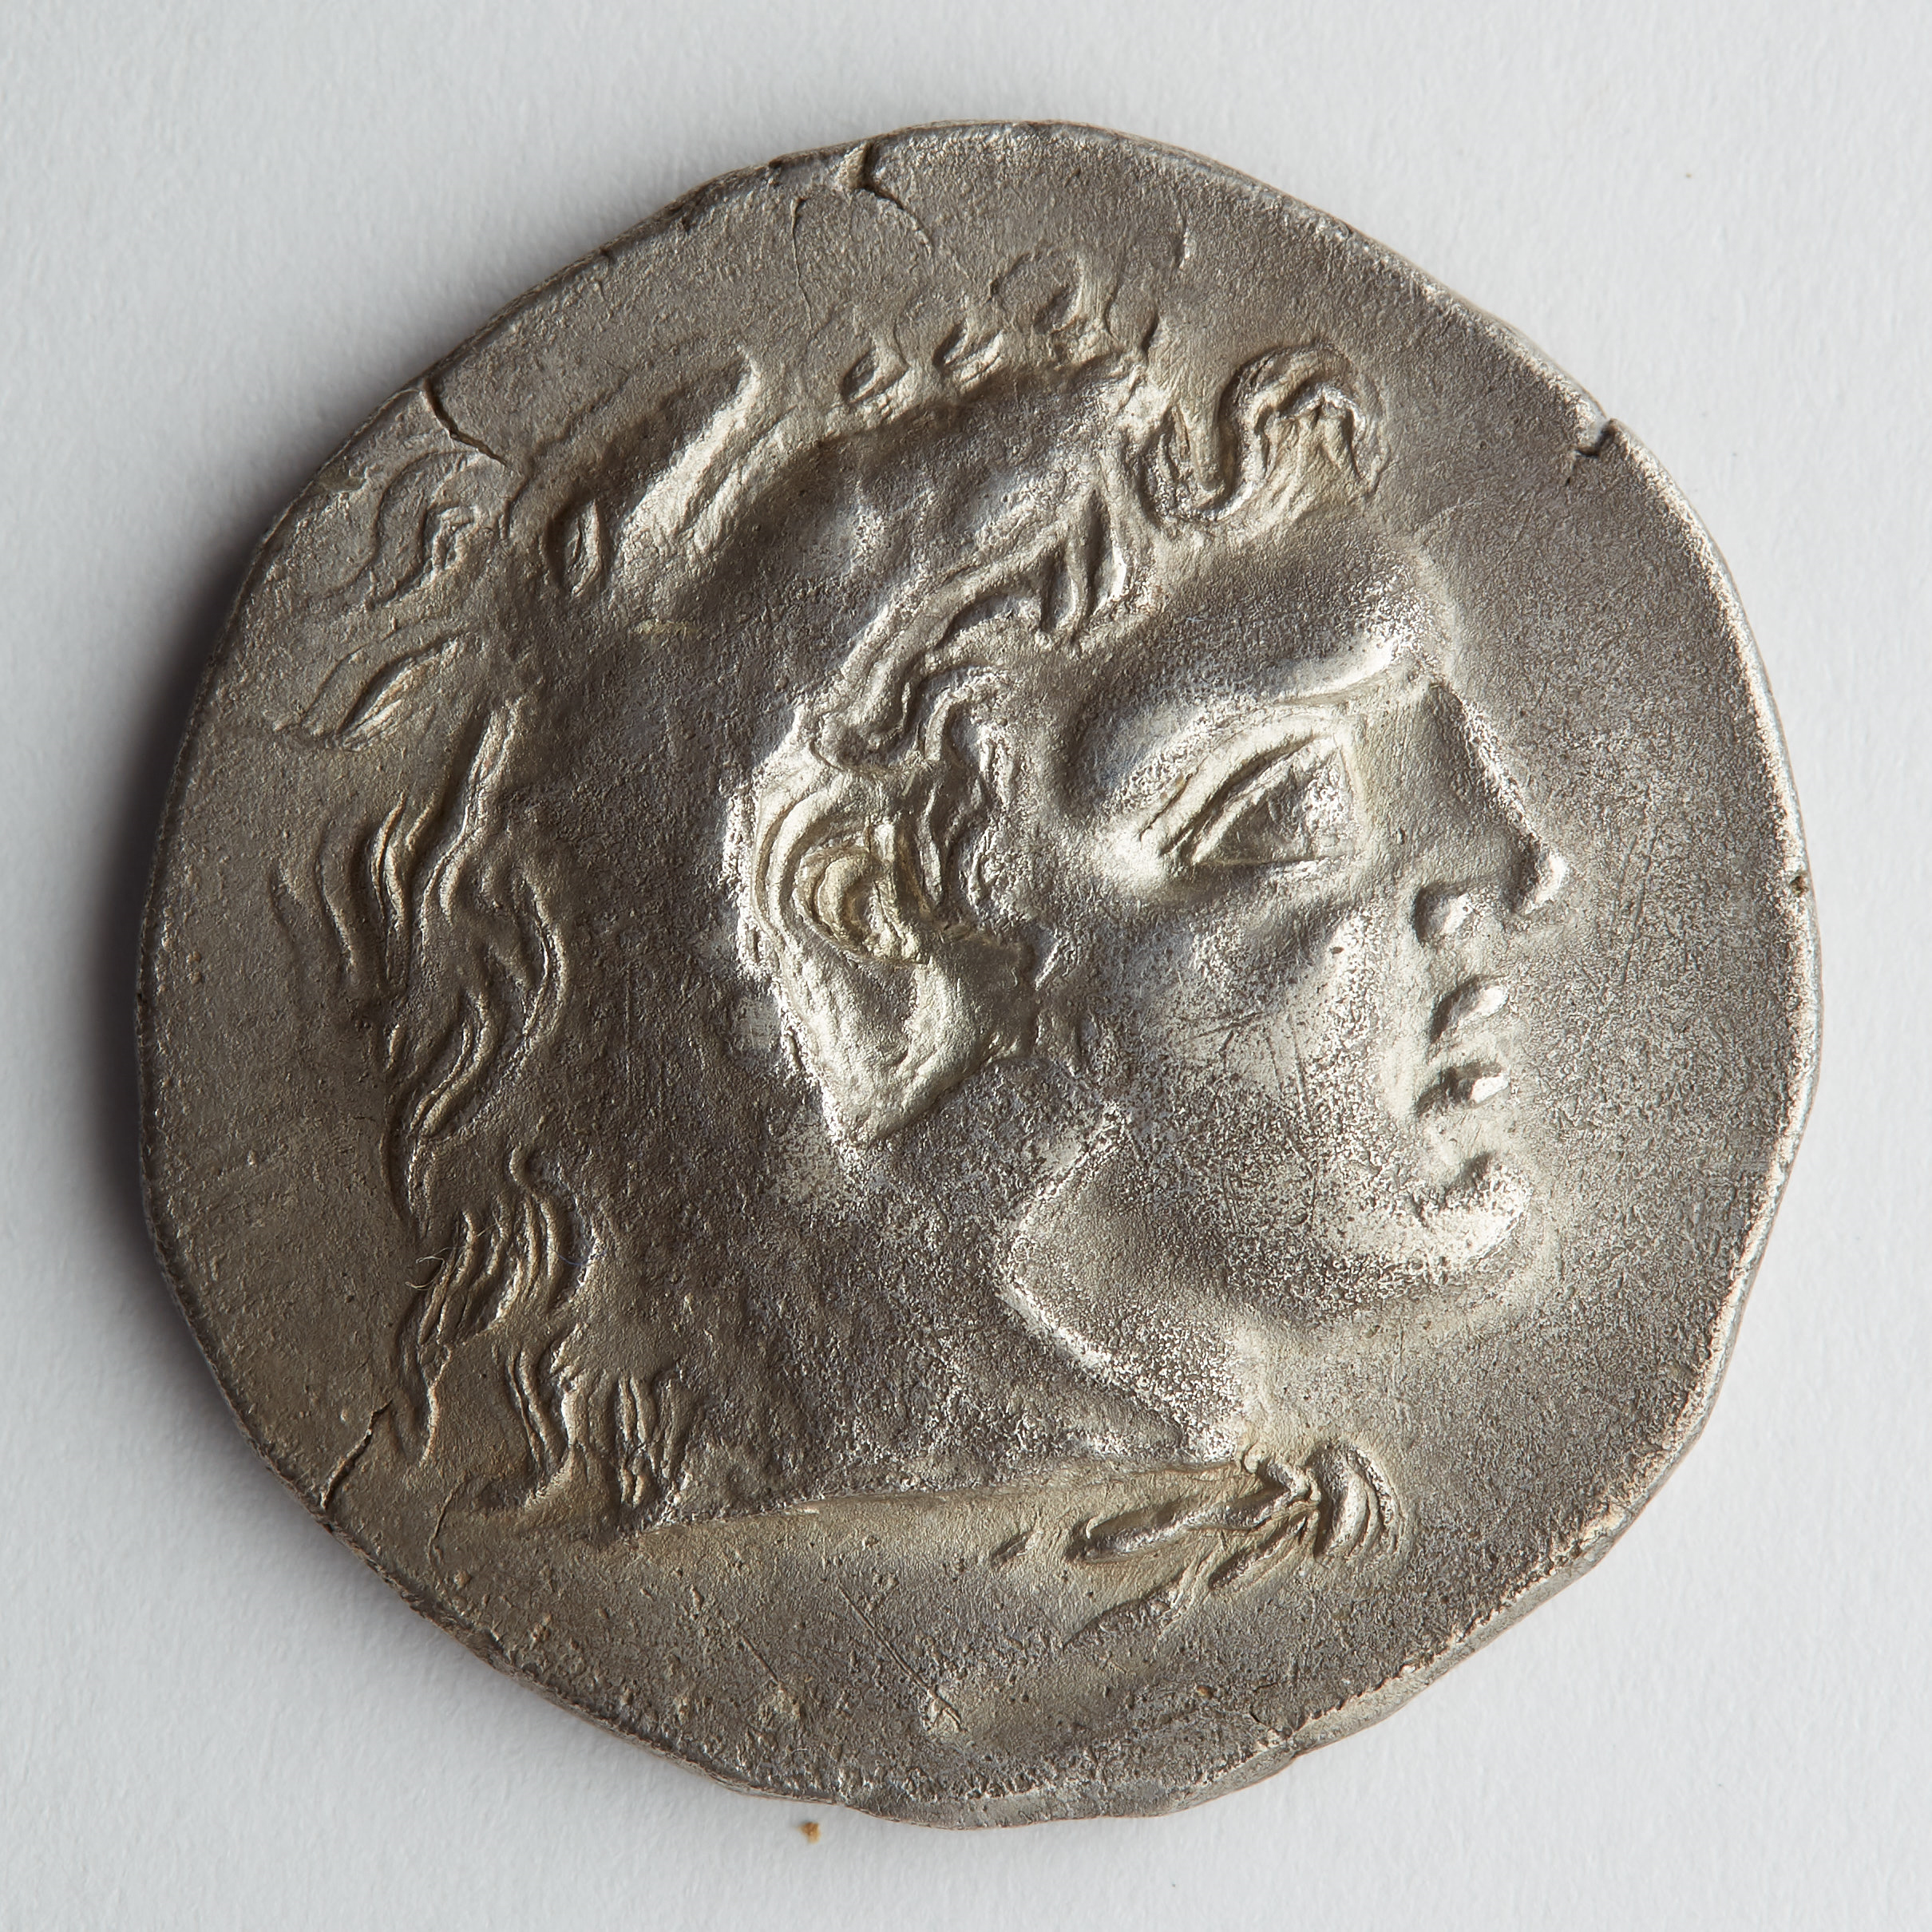 Lot 203: Thracian Coin - Mithradates VI of Pontus